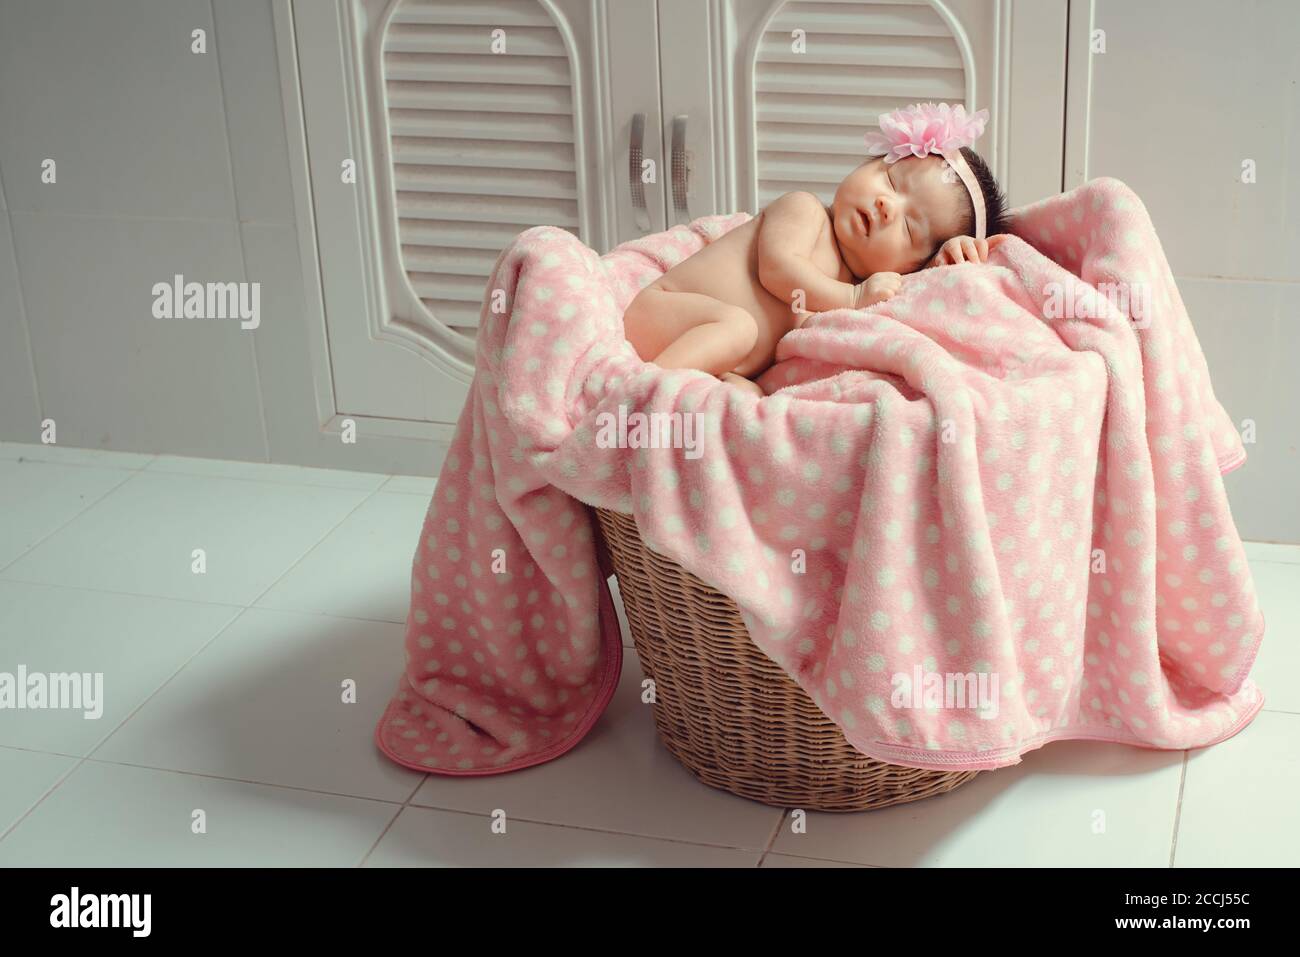 Beautiful newborn baby sleeping on a pink blanket in a wicker basket. Stock Photo